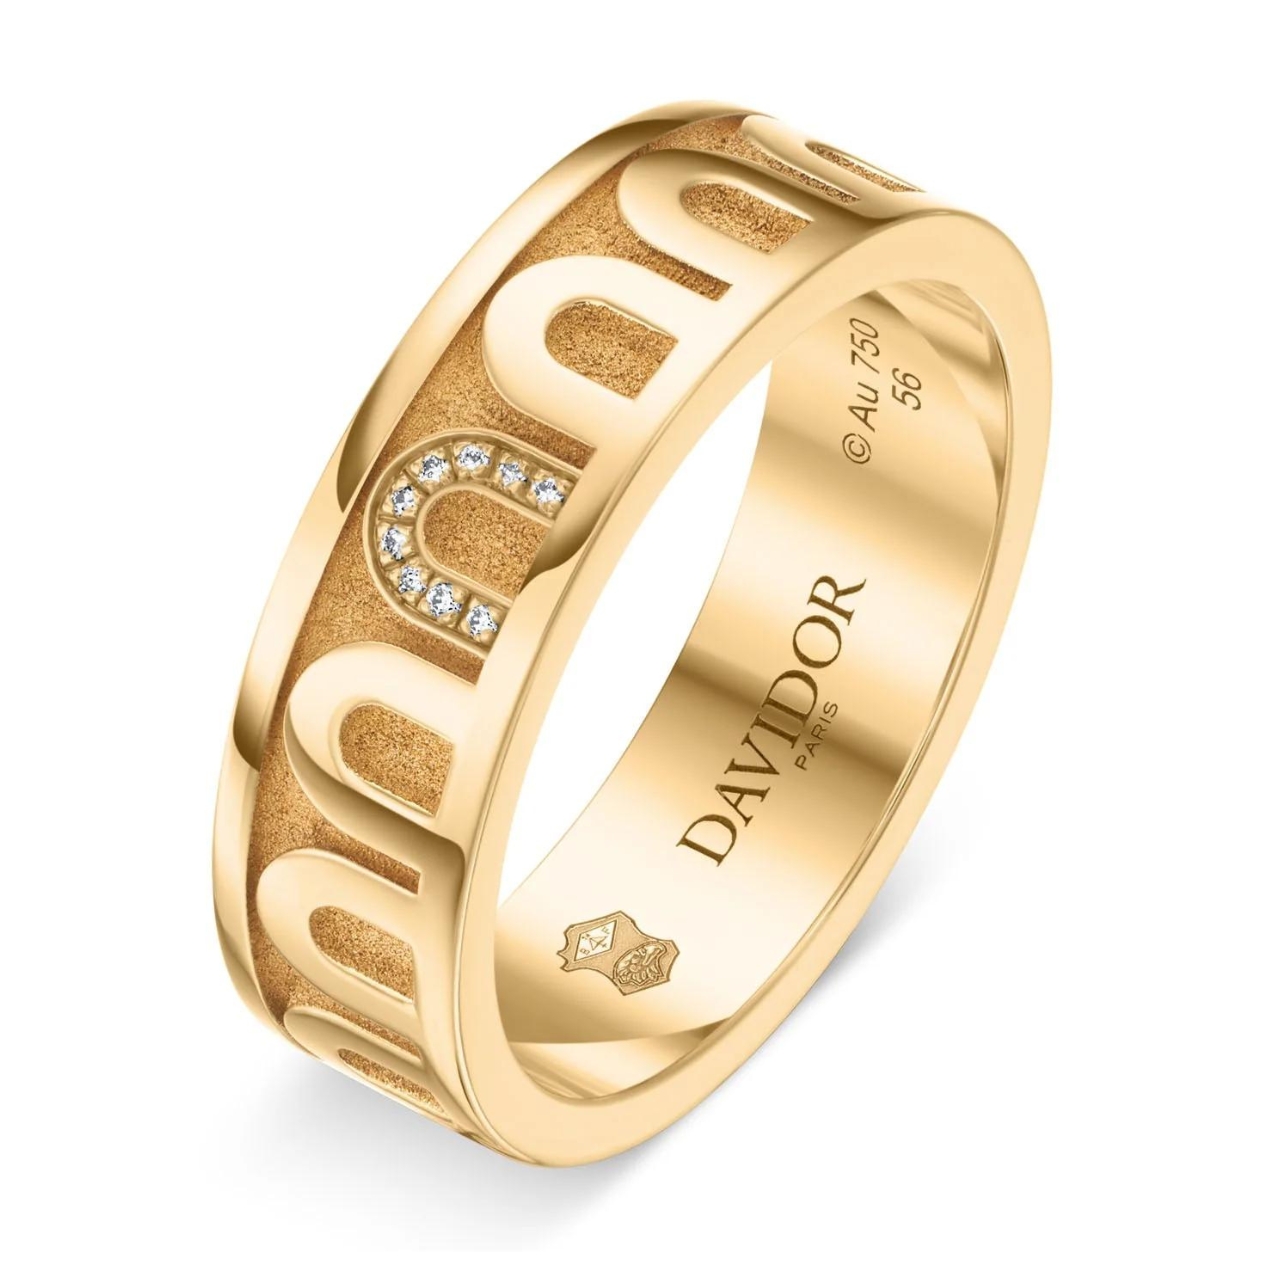 Davidor ring in 18k yellow gold with diamonds